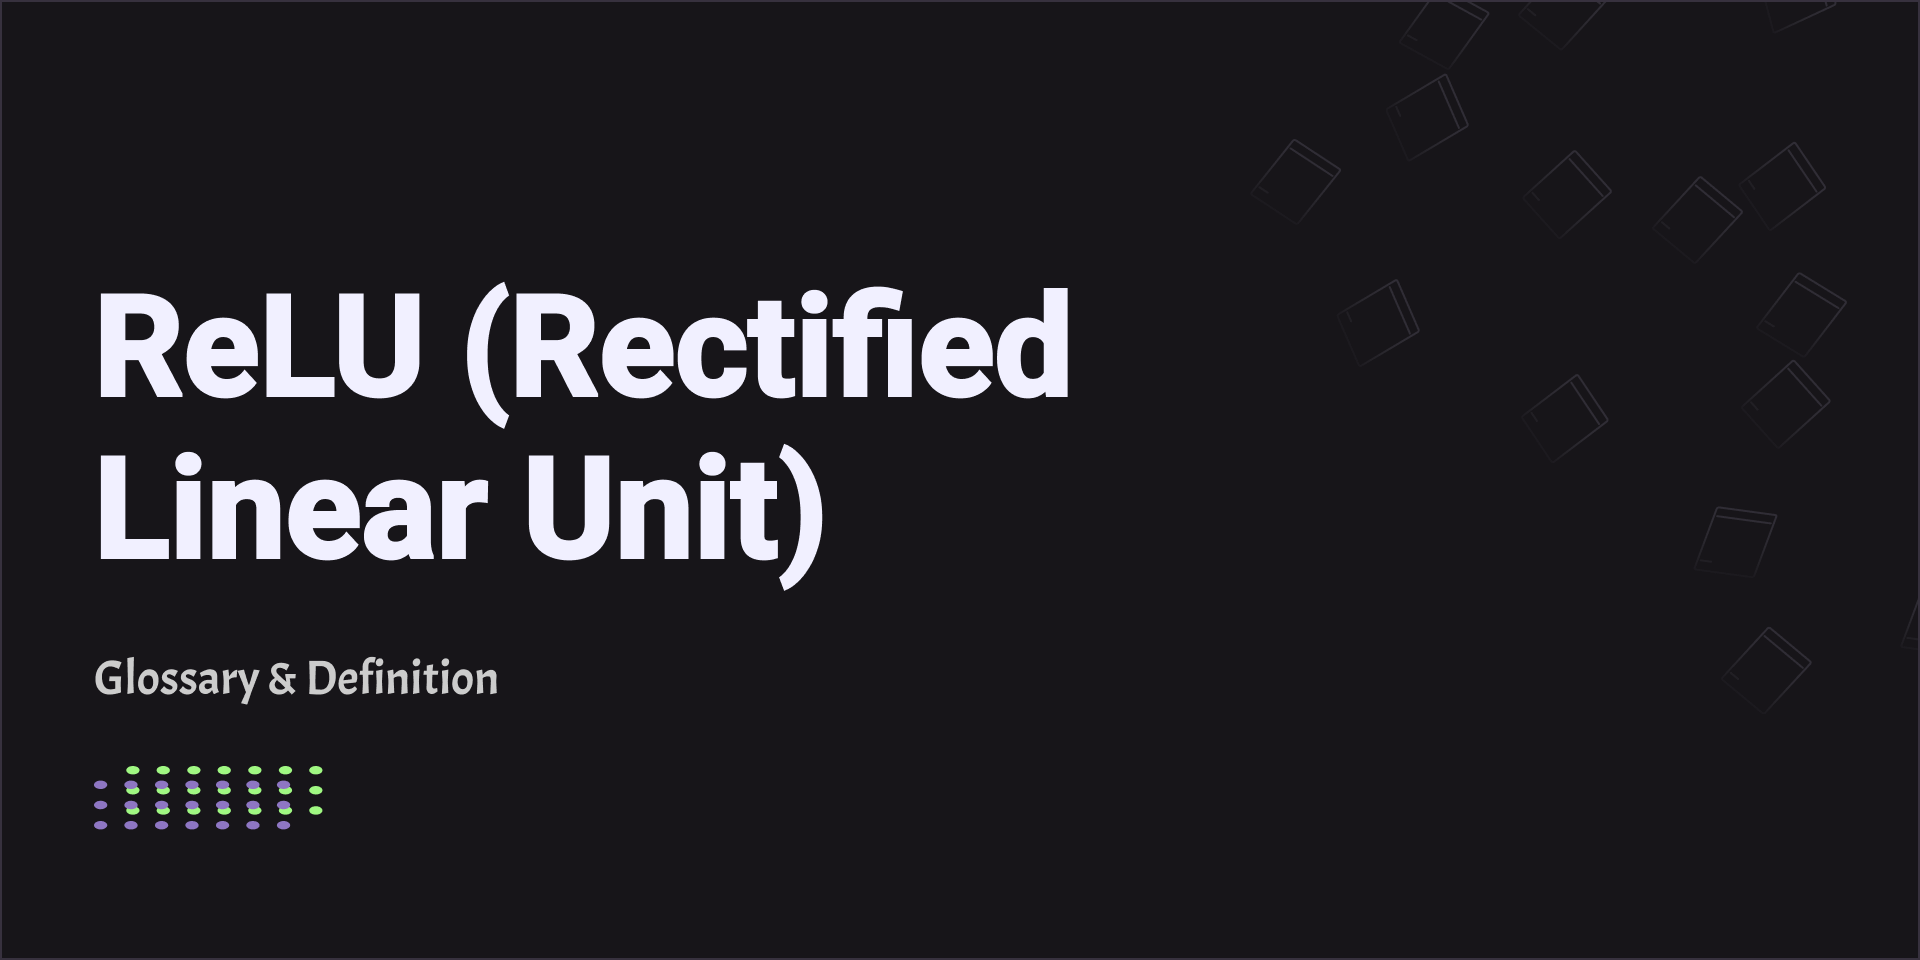 ReLU (Rectified Linear Unit)